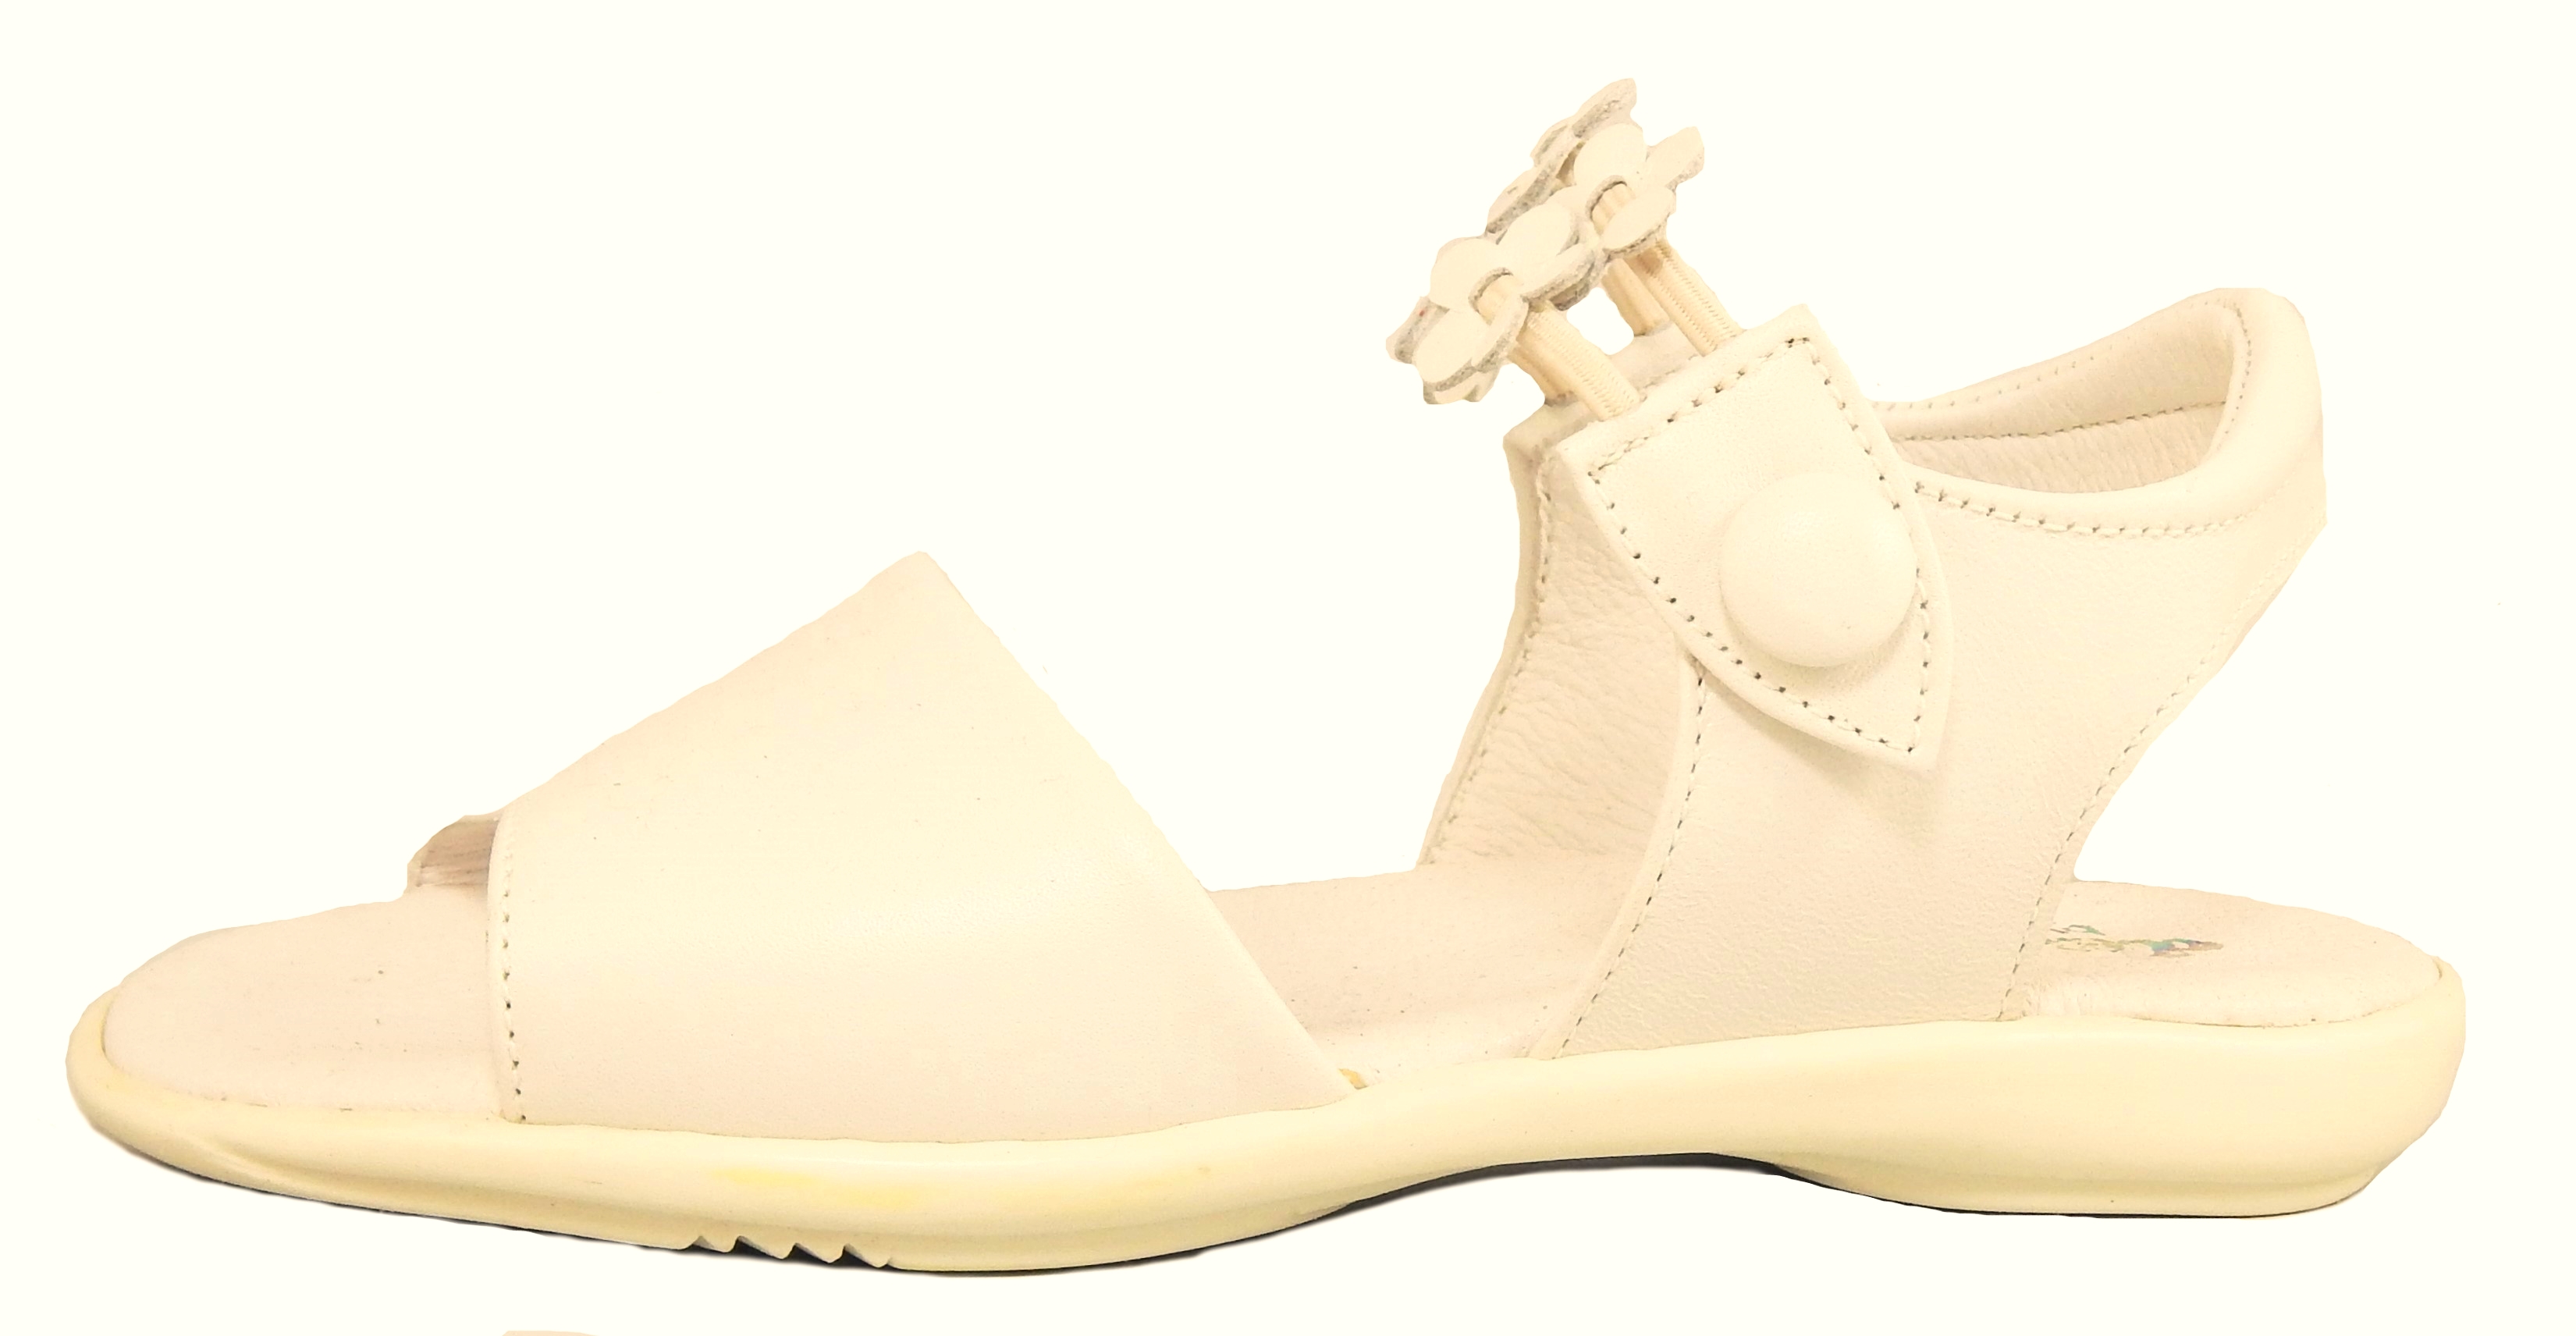 K-1065 - Girls Ivory Dress Sandals - Euro 25 Size 8